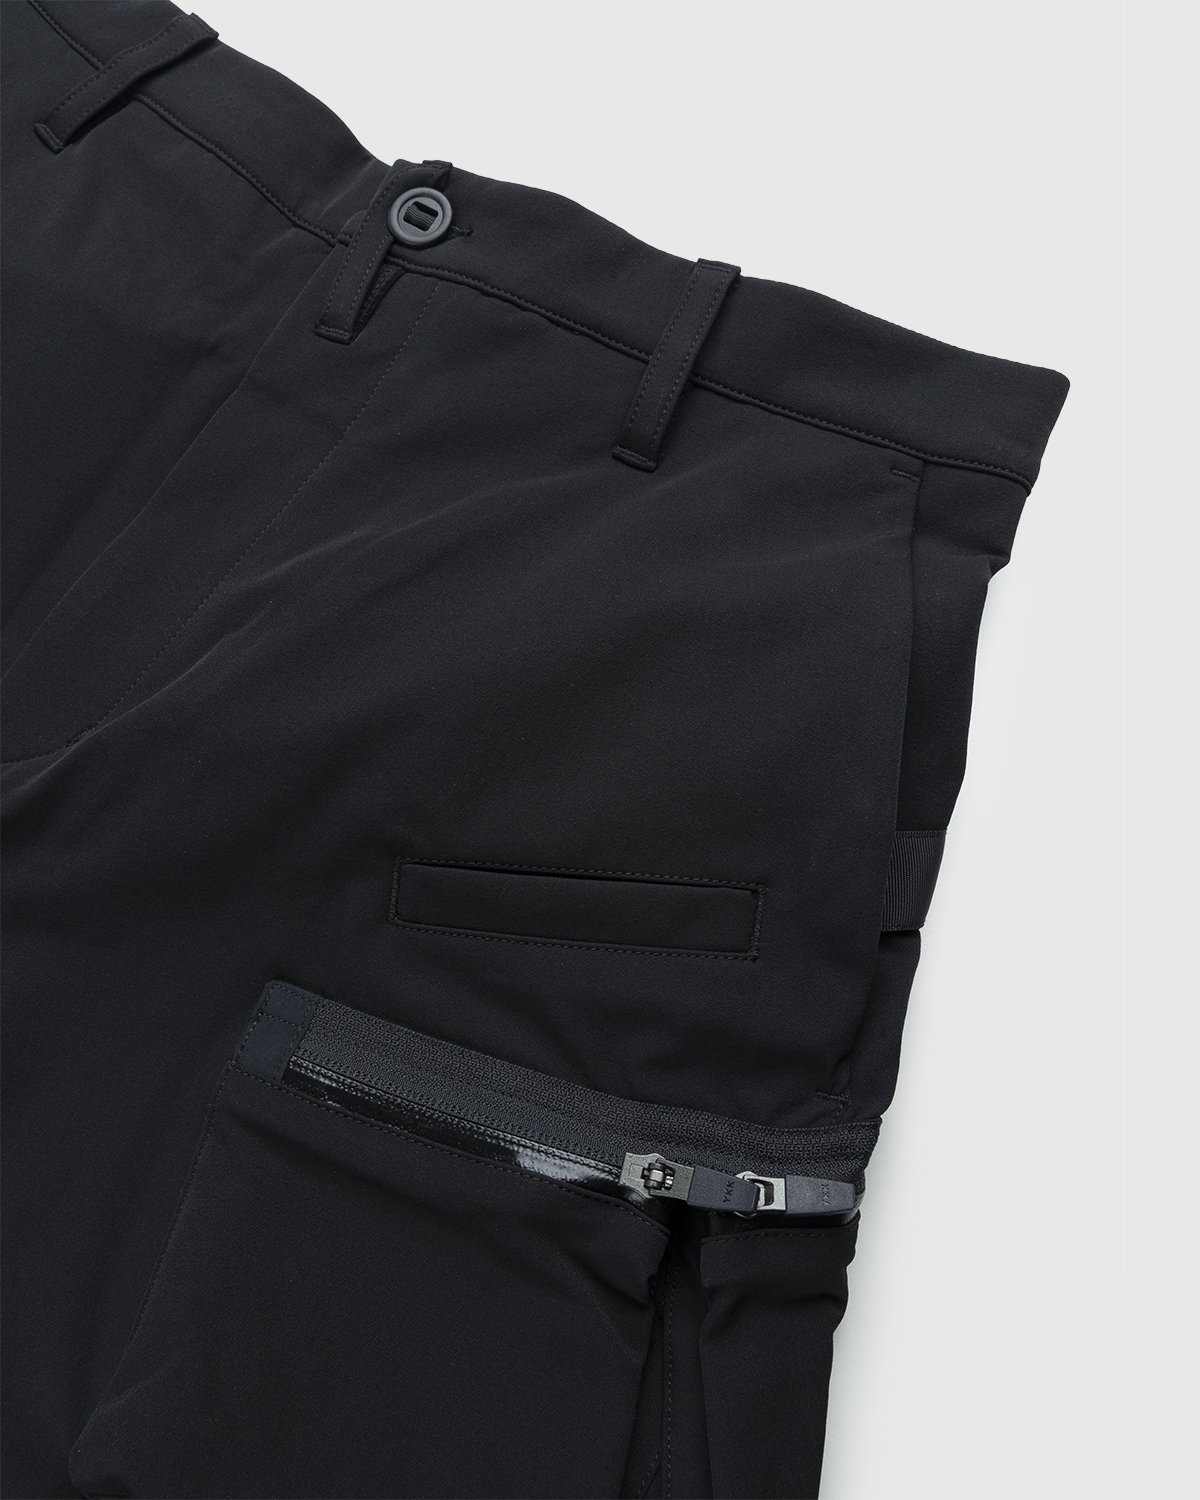 ACRONYM - P41-DS Schoeller Dryskin Articulated Cargo Trouser Black - Clothing - Black - Image 6